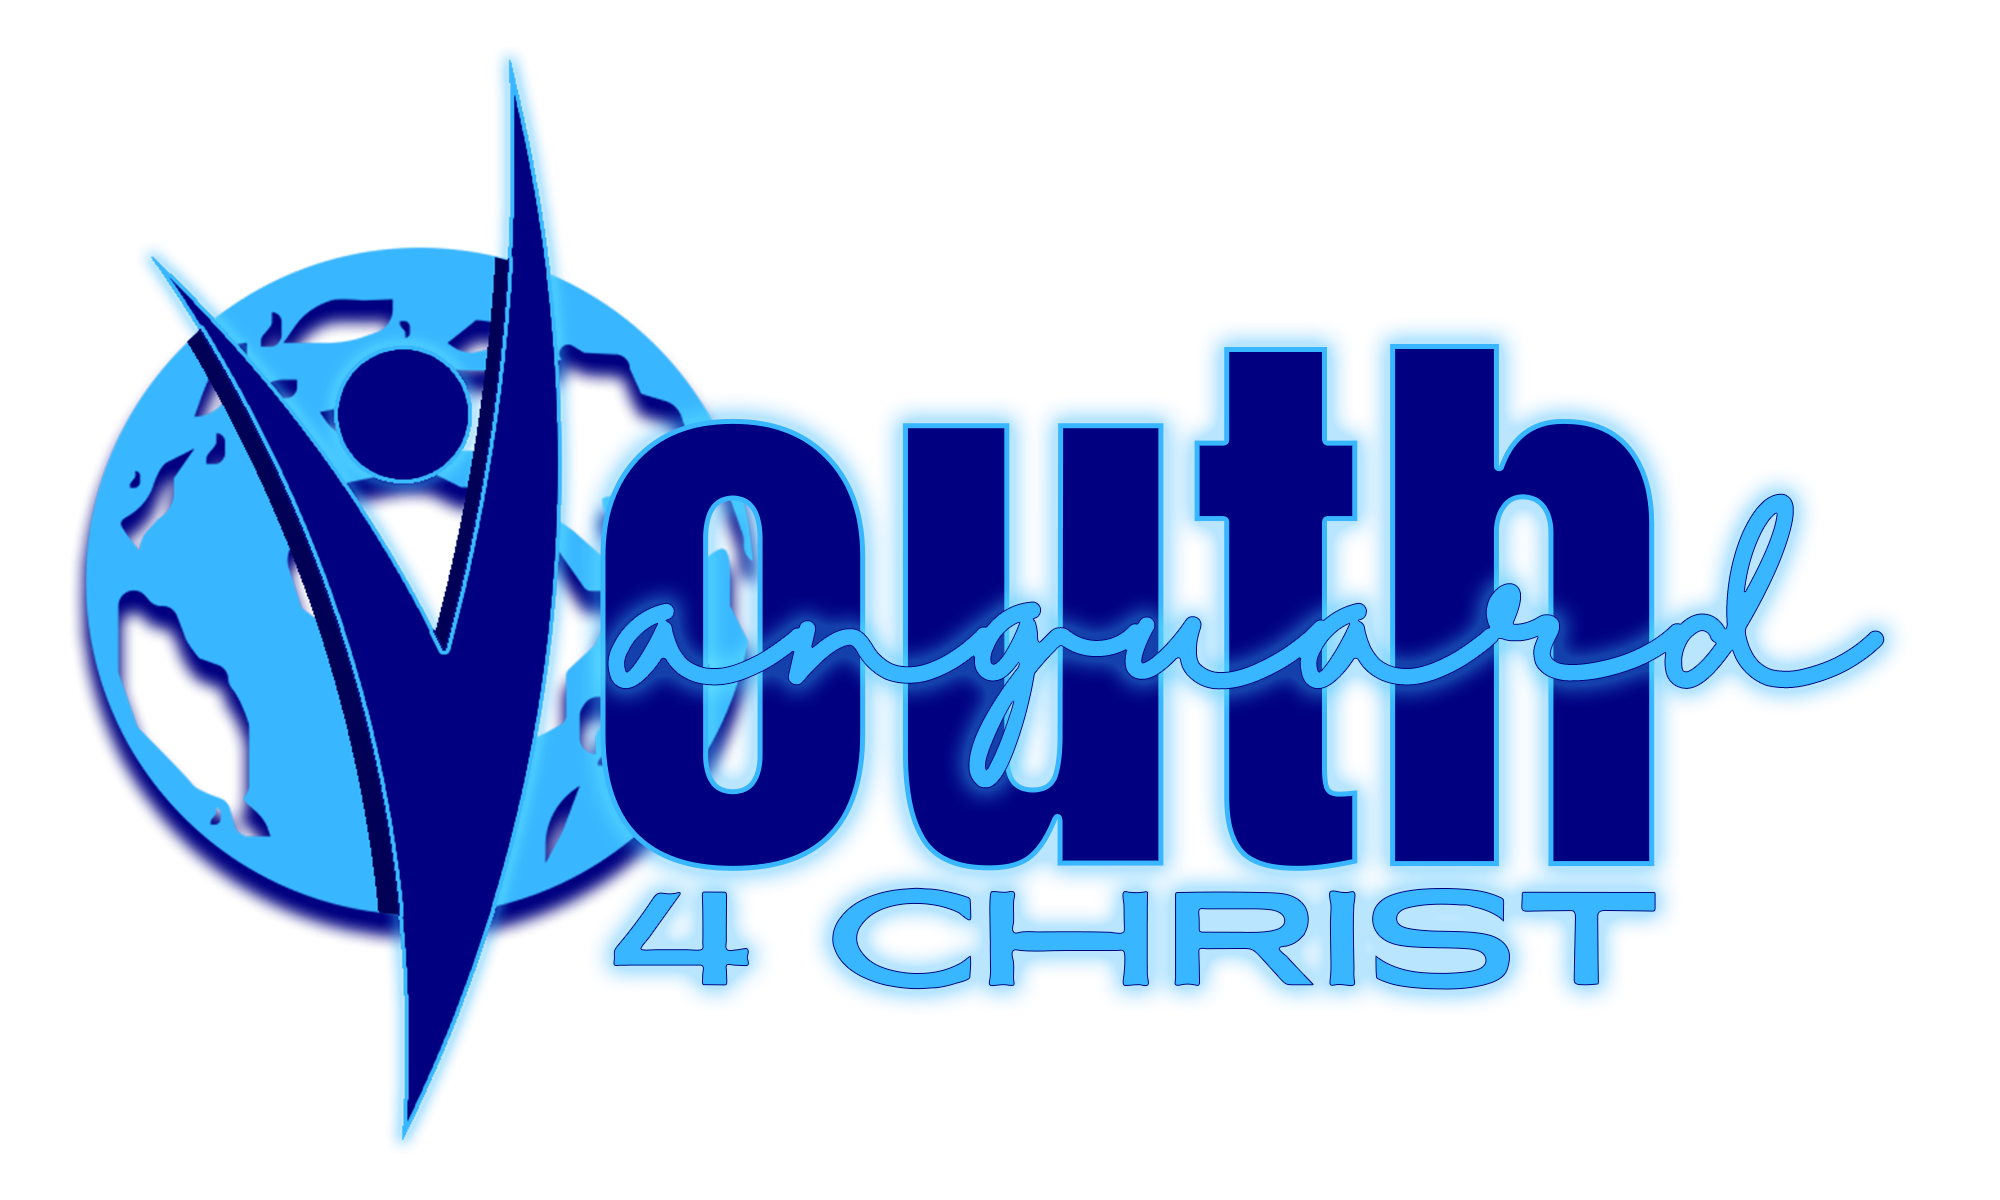 Vanguard Youth 4 Christ